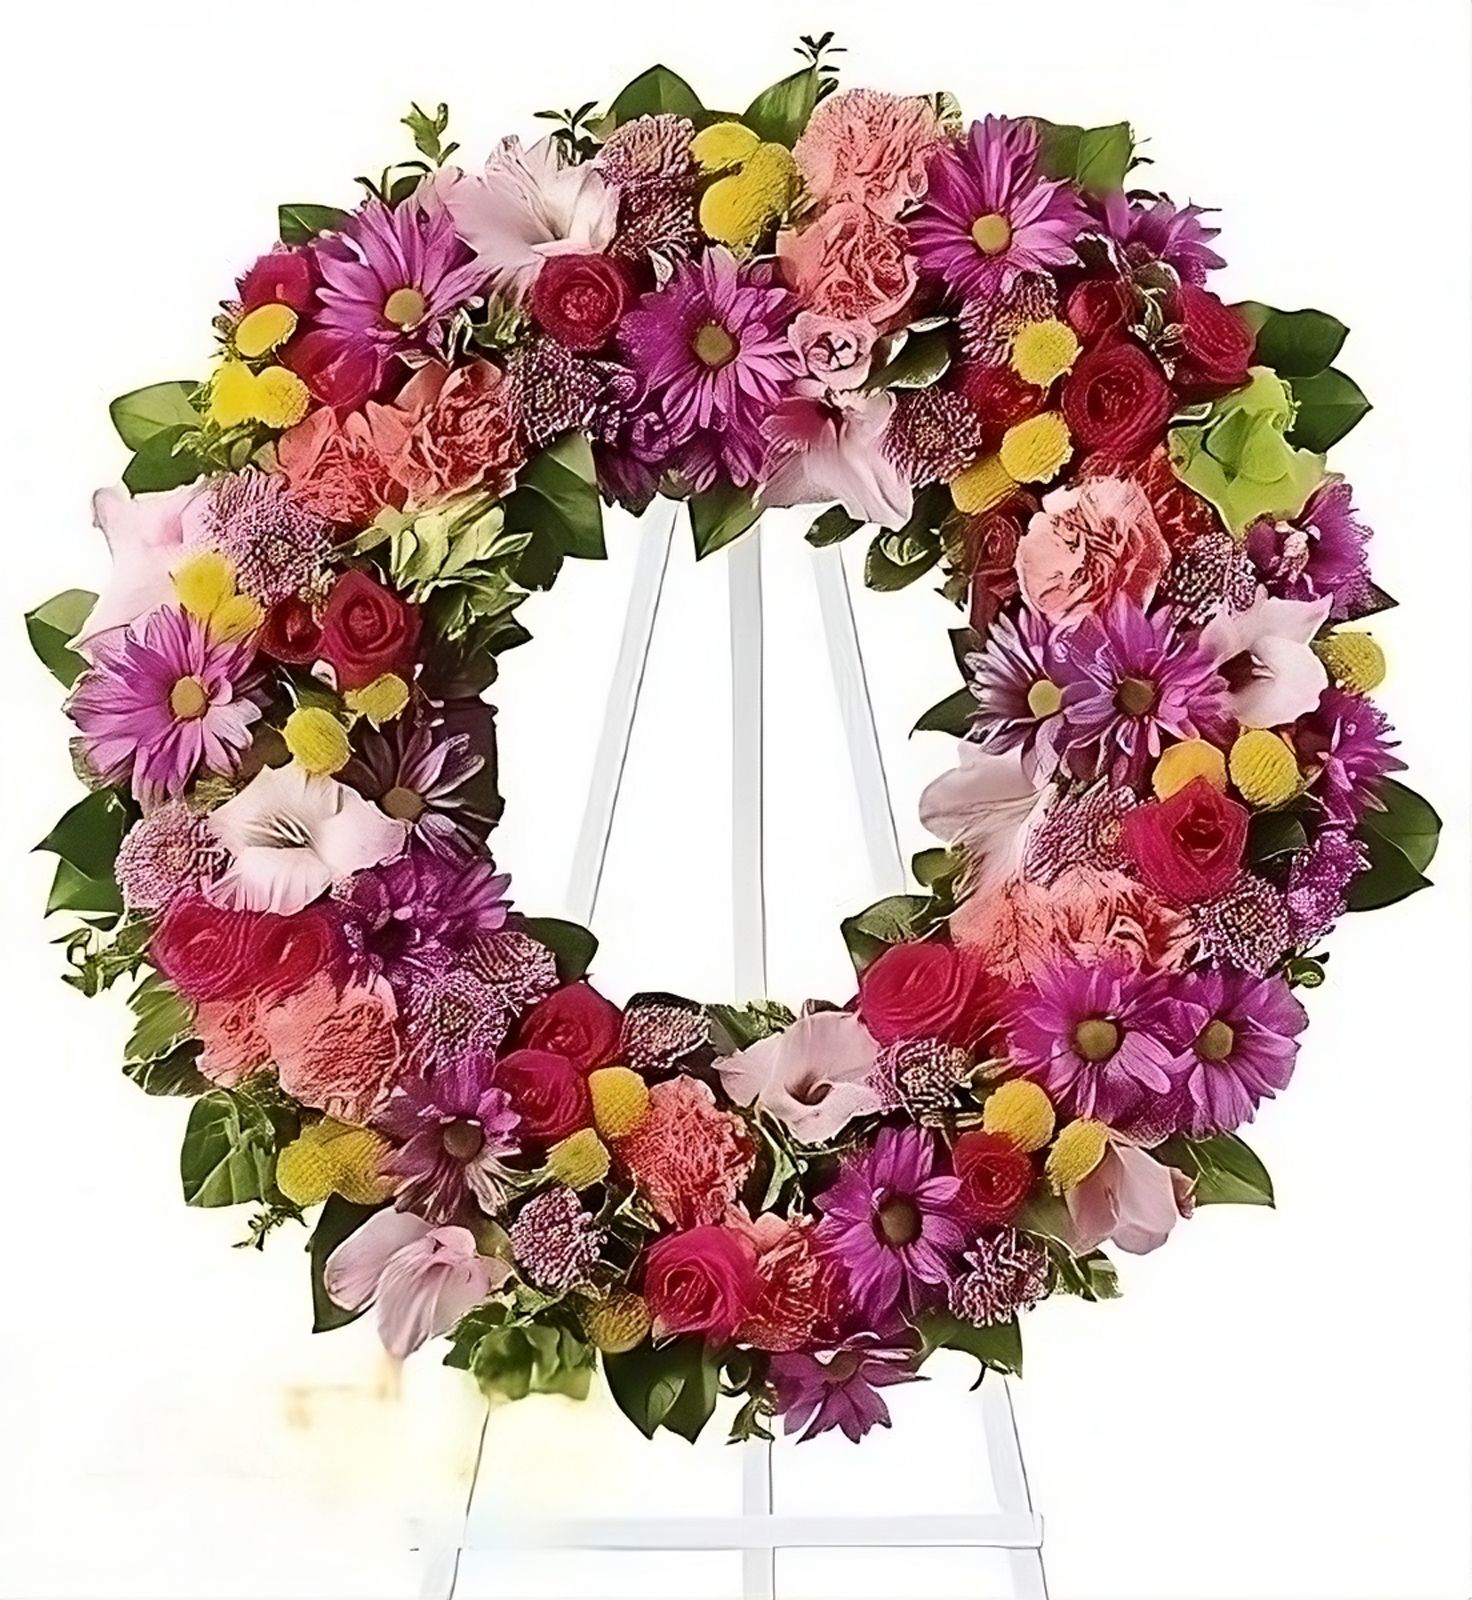 Funeral arrangement of fresh flowers №10 Funeral arrangement of fresh flowers №10